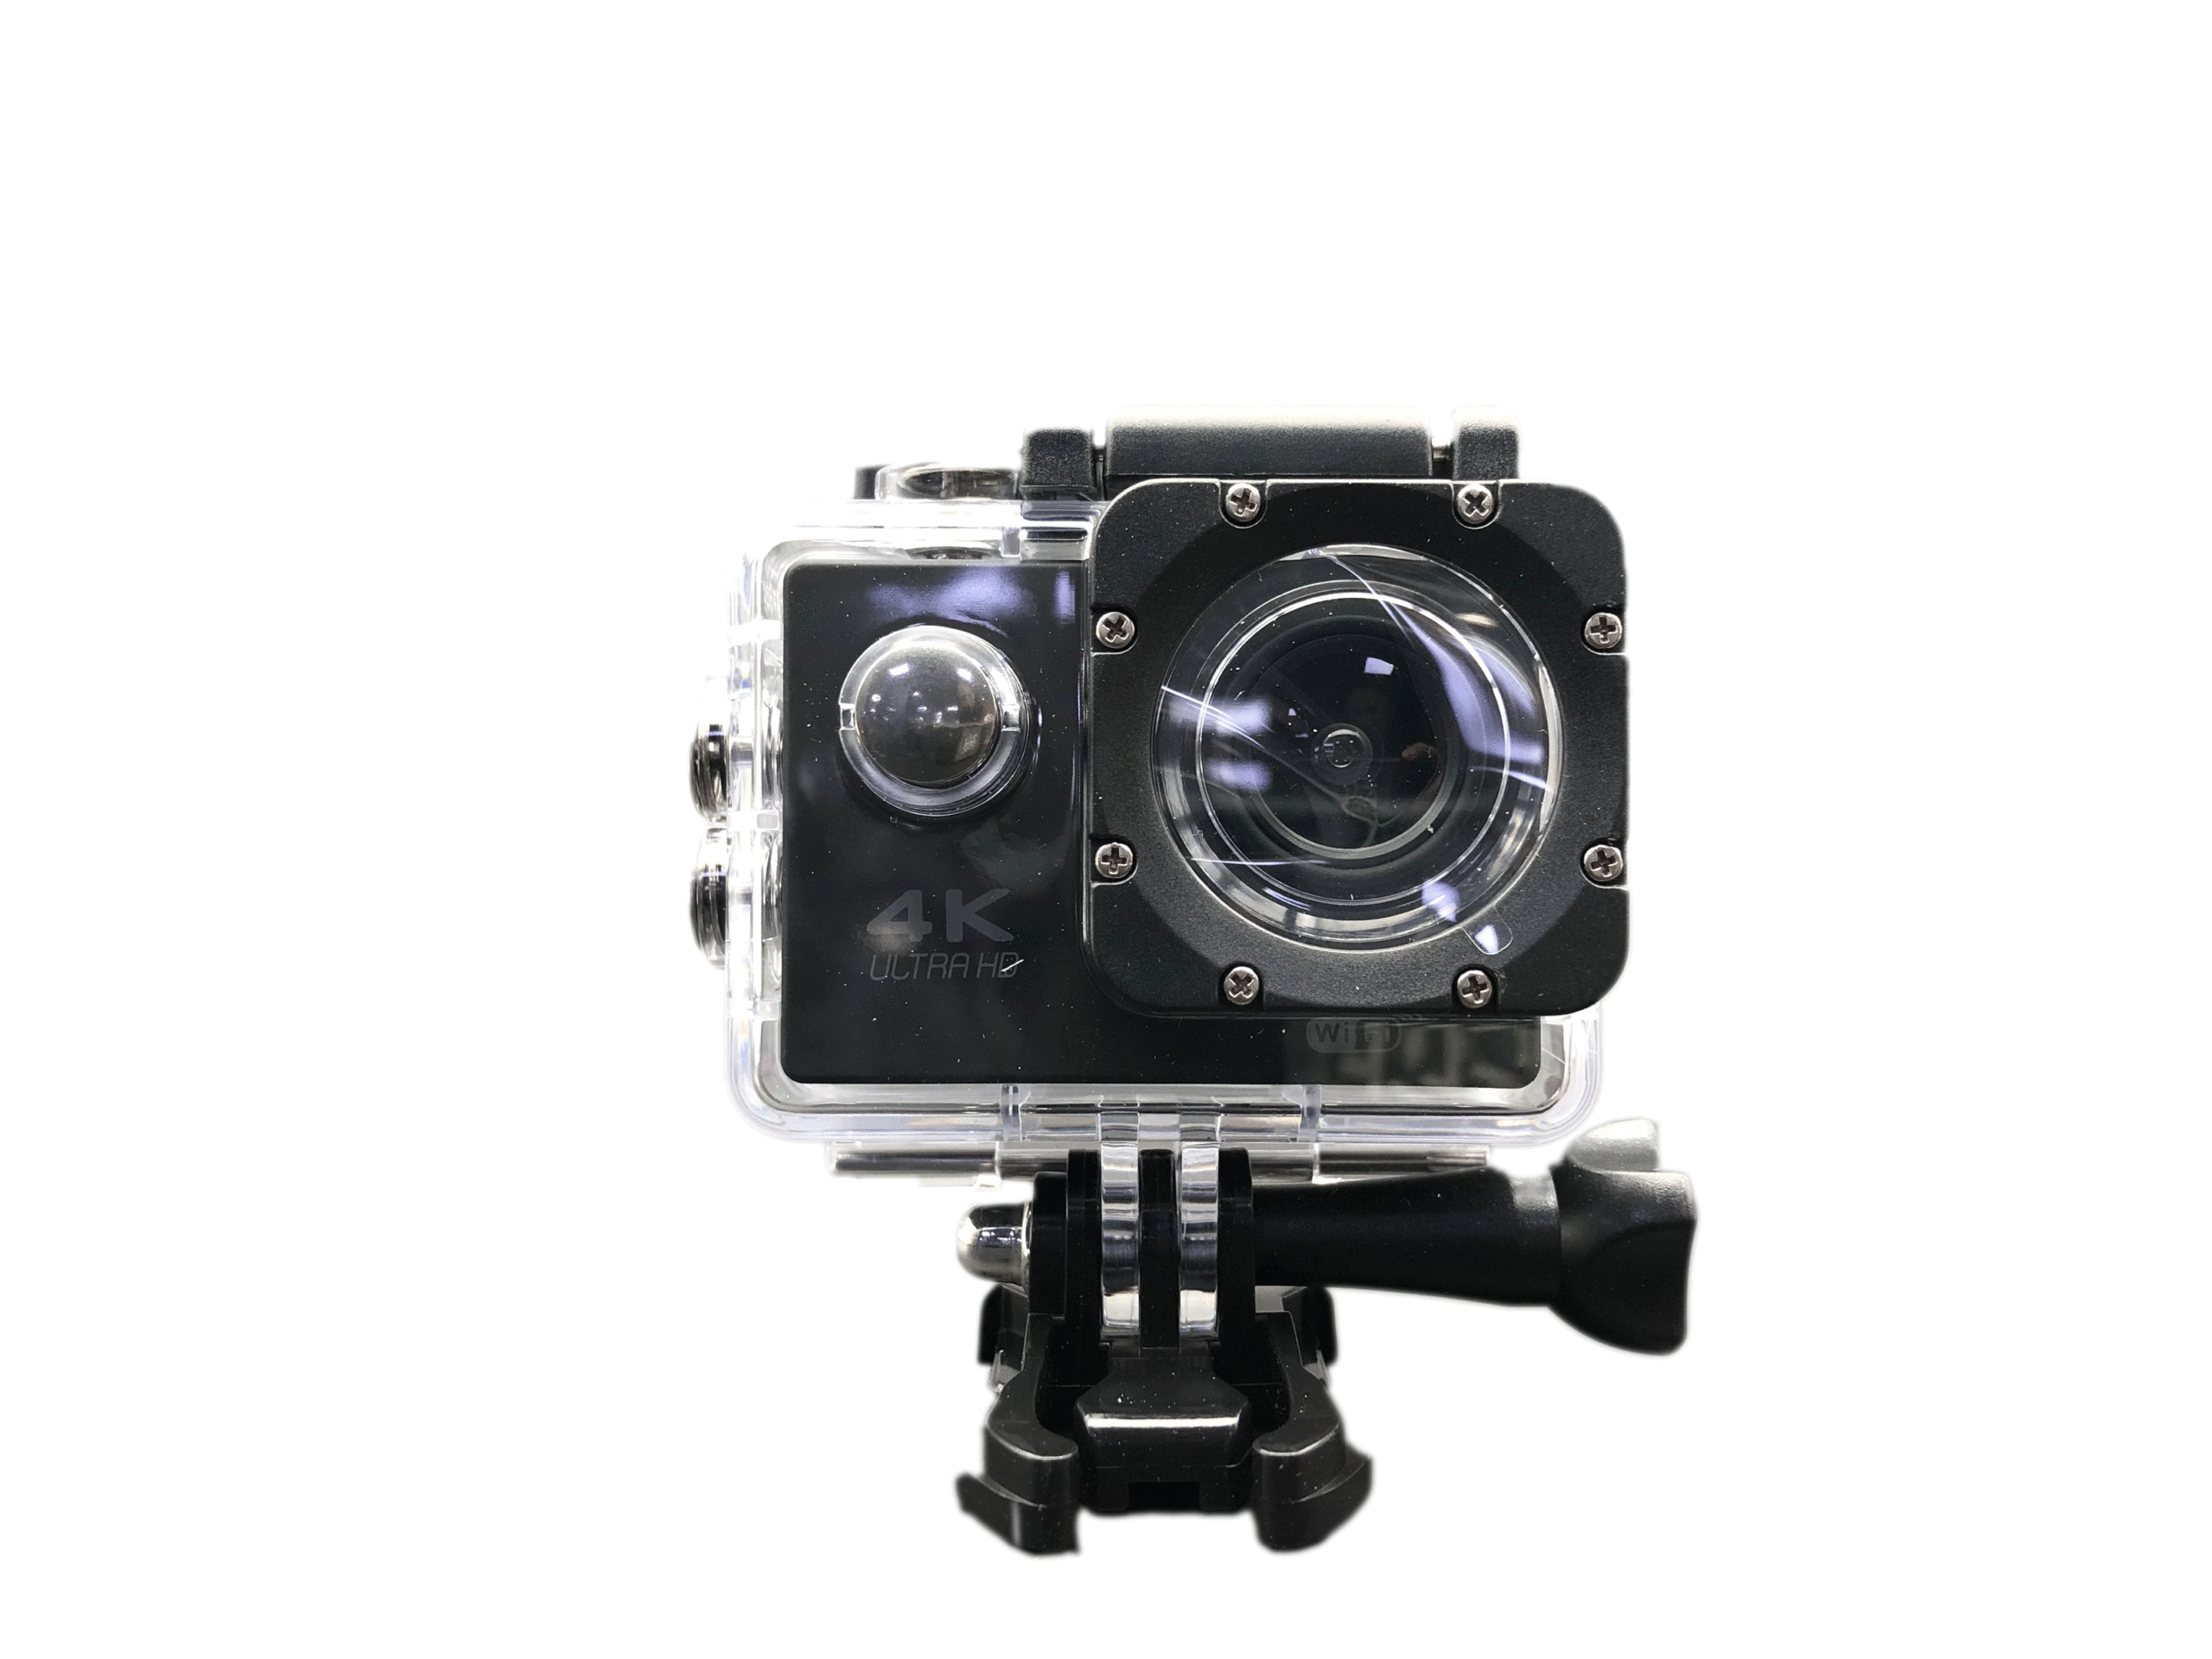 Action Camera με μπουτόν 4K Ultra HD Sports cam-WIFI